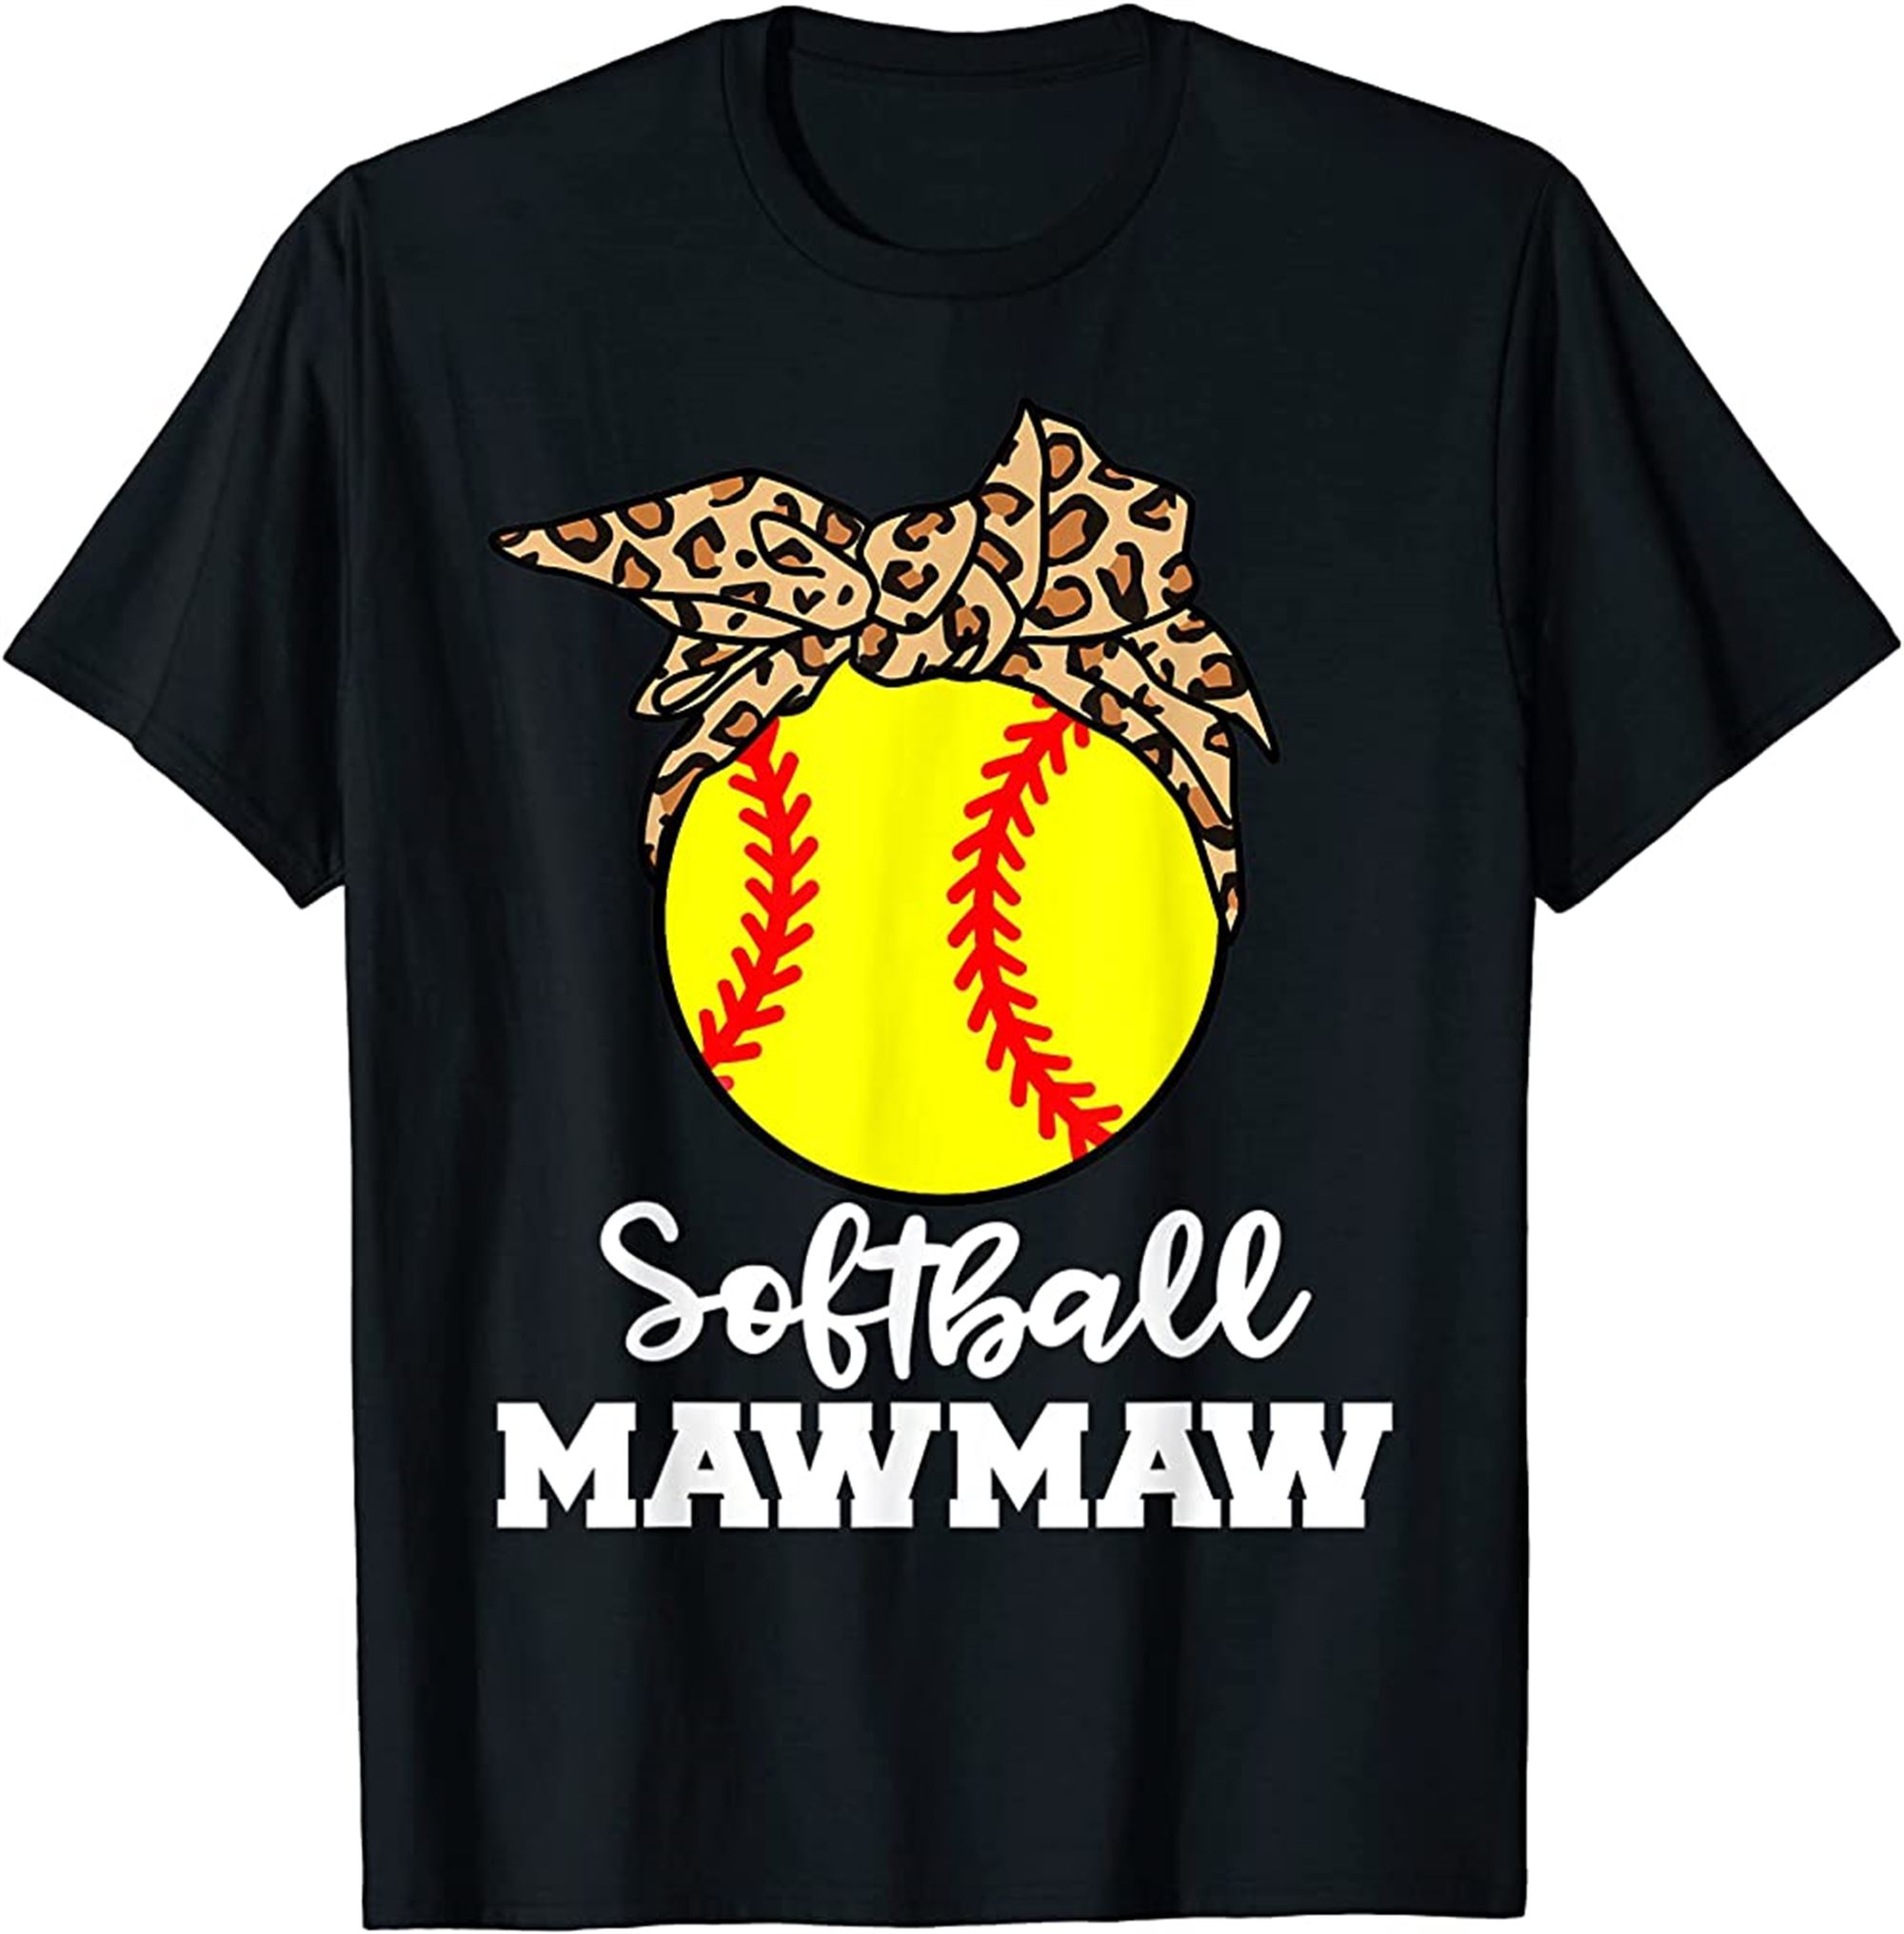 Softball Mawmaw Funny Softball Player Leopard Maw Maw T-shirt Size Up To 5xl